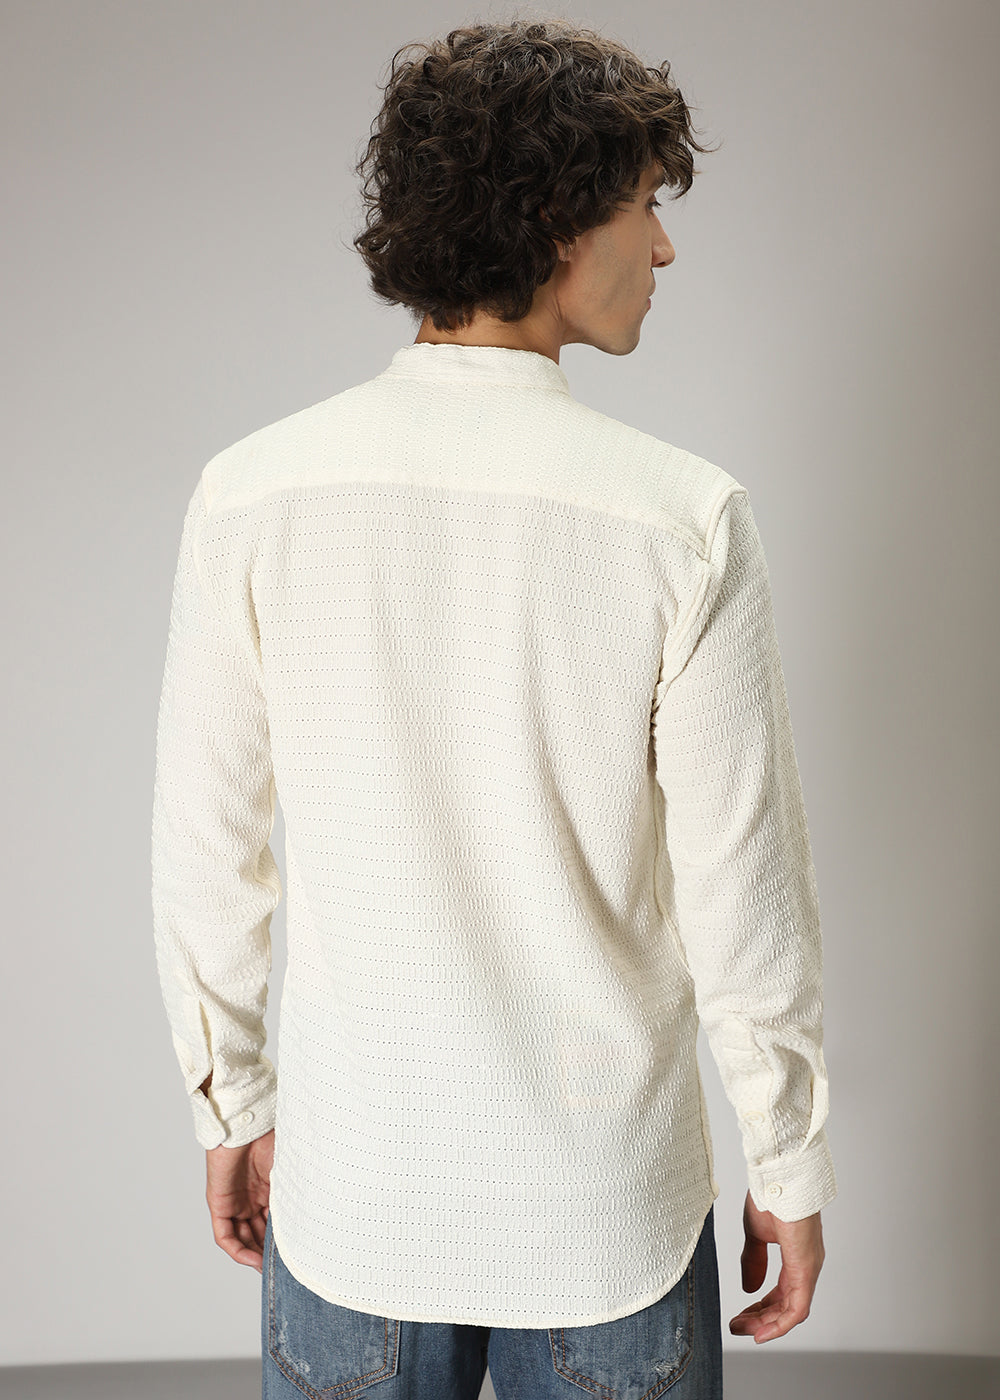 Light Cream Knitted Crochet Shirt